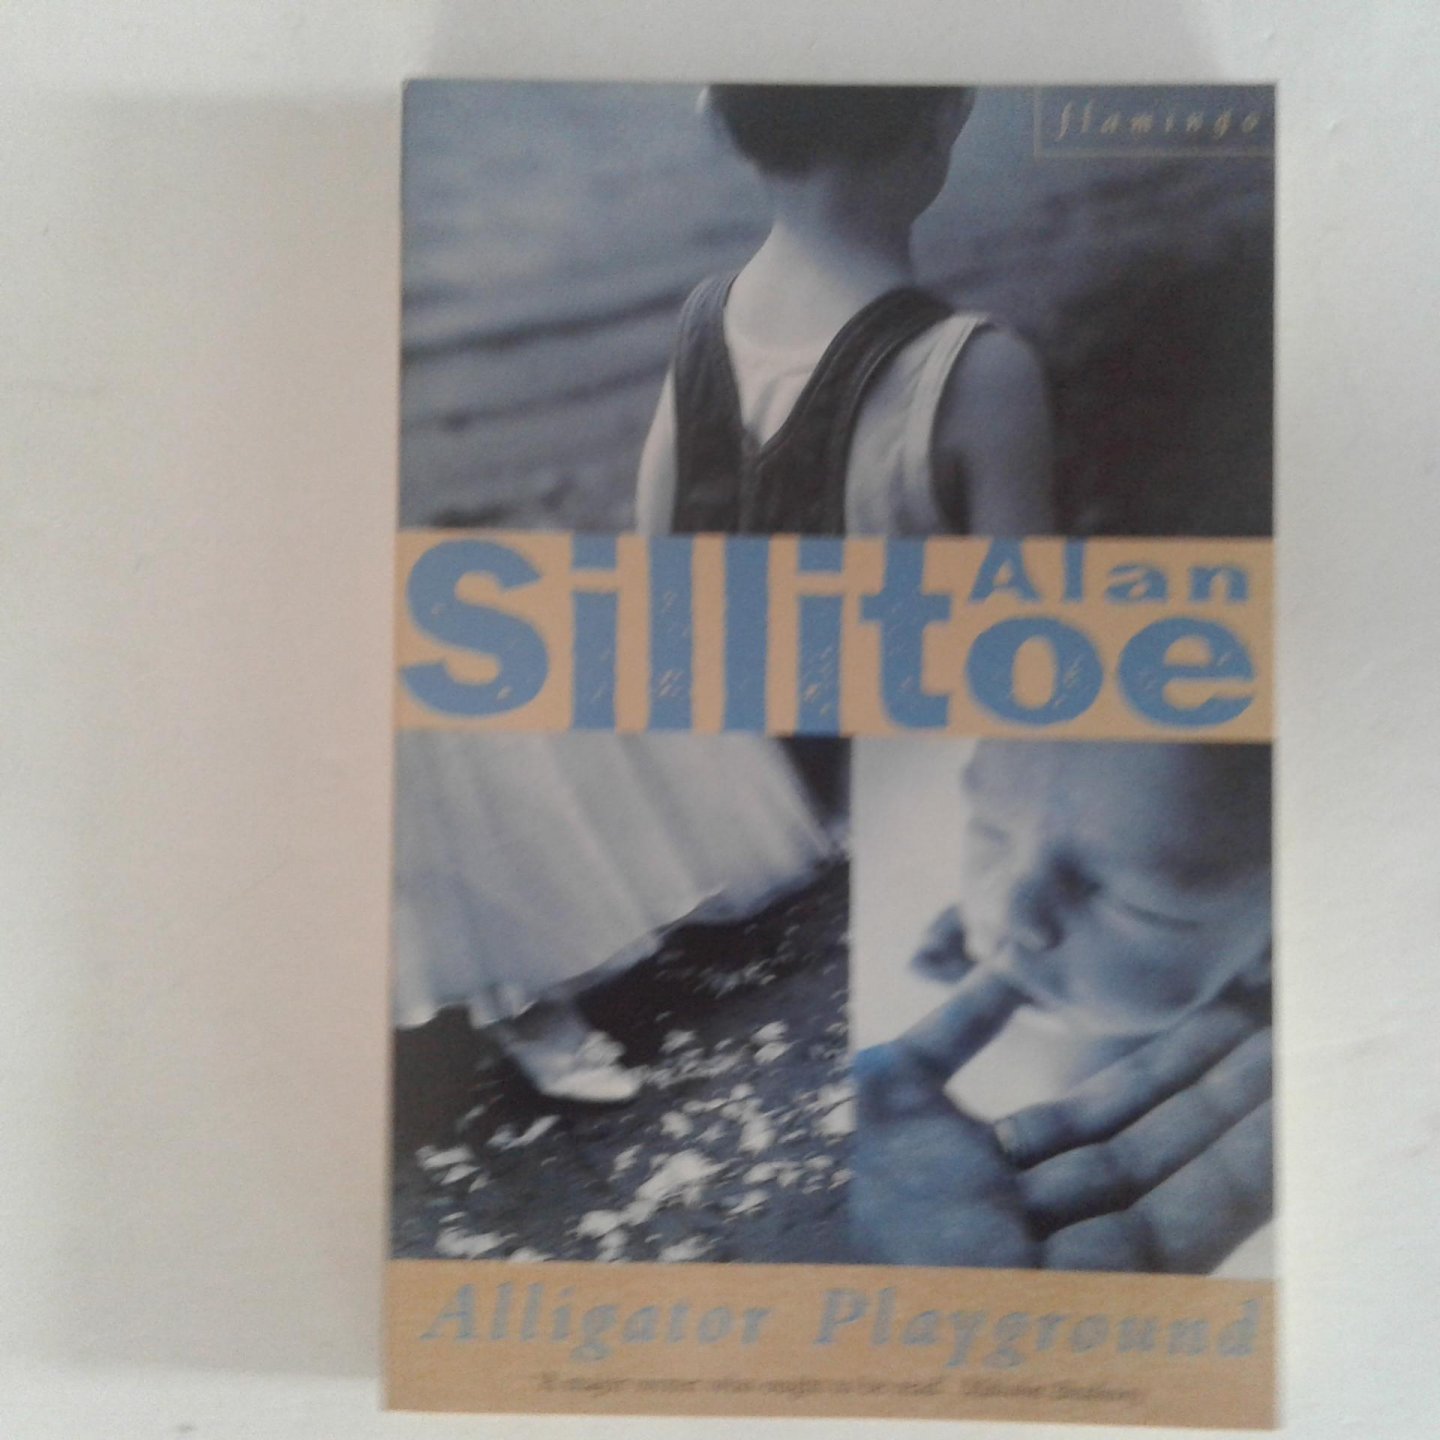 Sillitoe, Alan - Alligator Playground